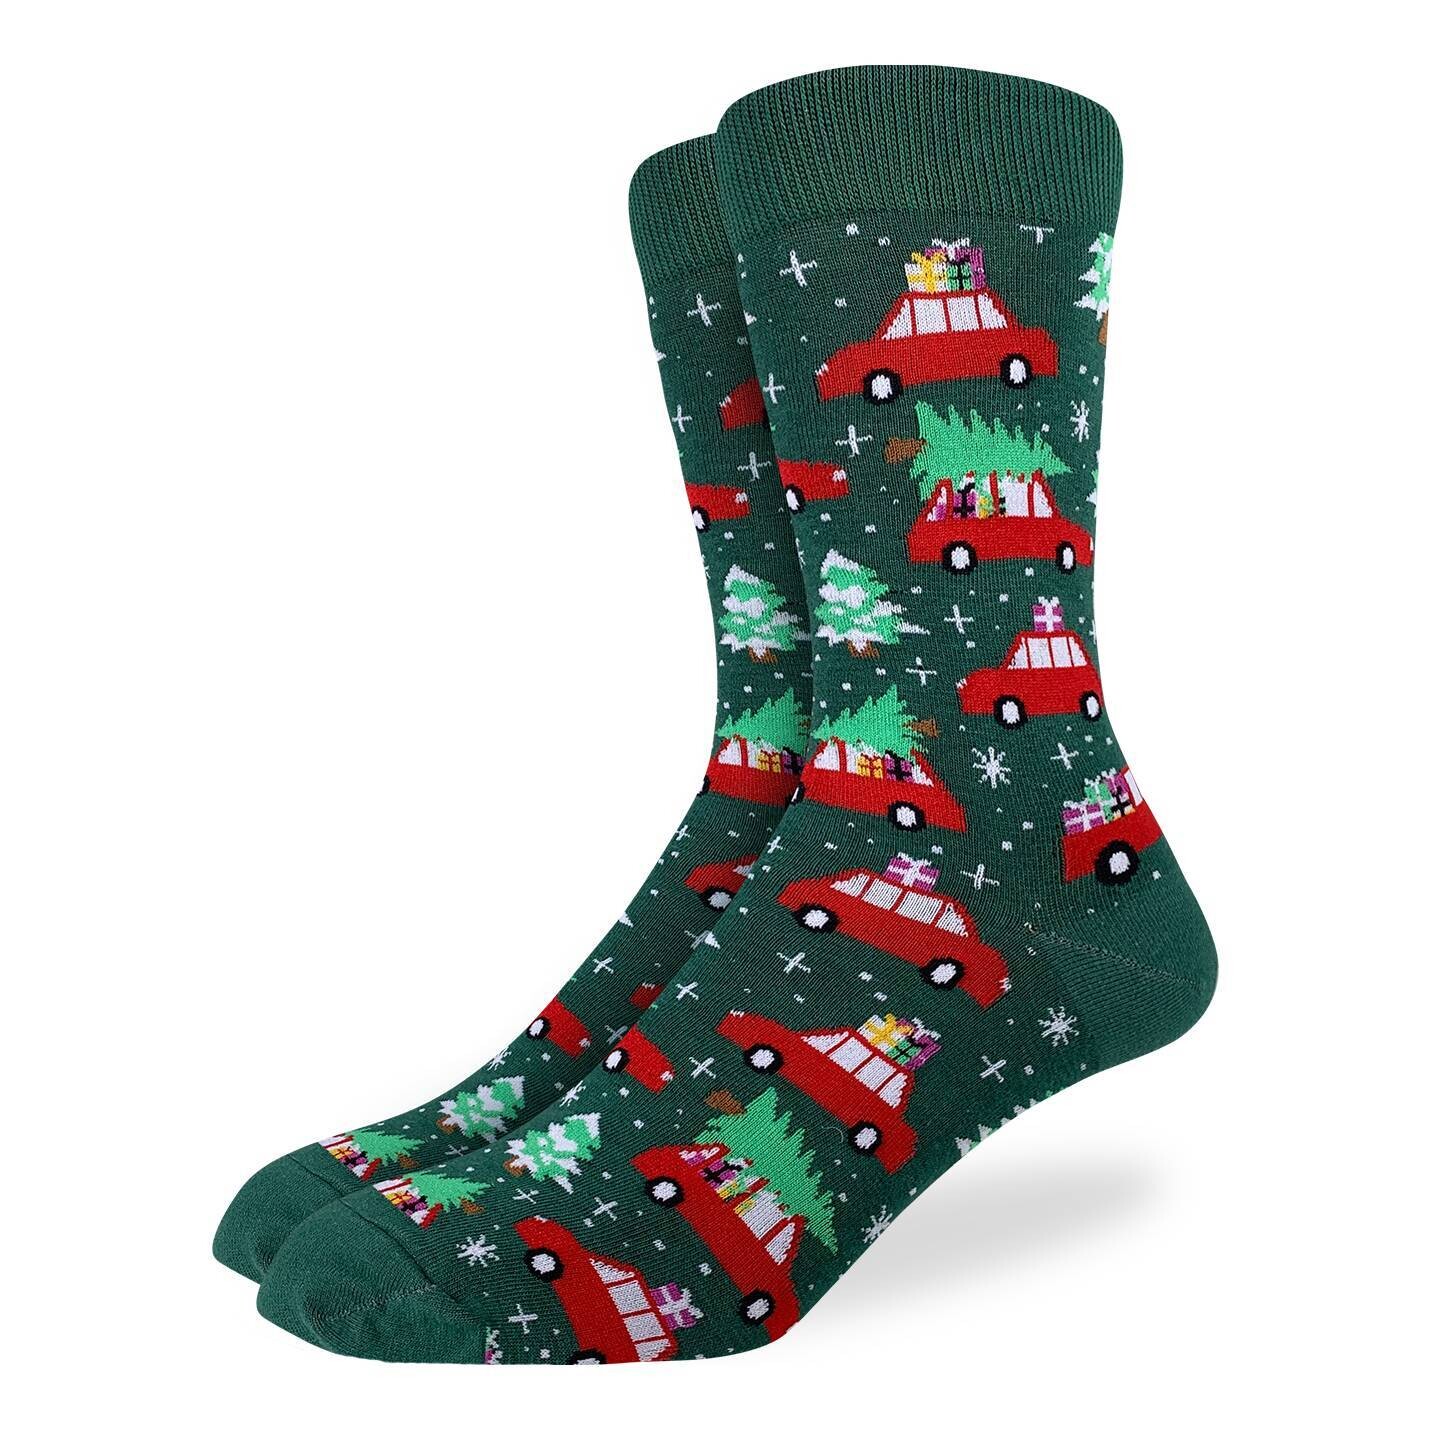 Christmas Trees socks | M/L adult sizes | Good Luck Sock